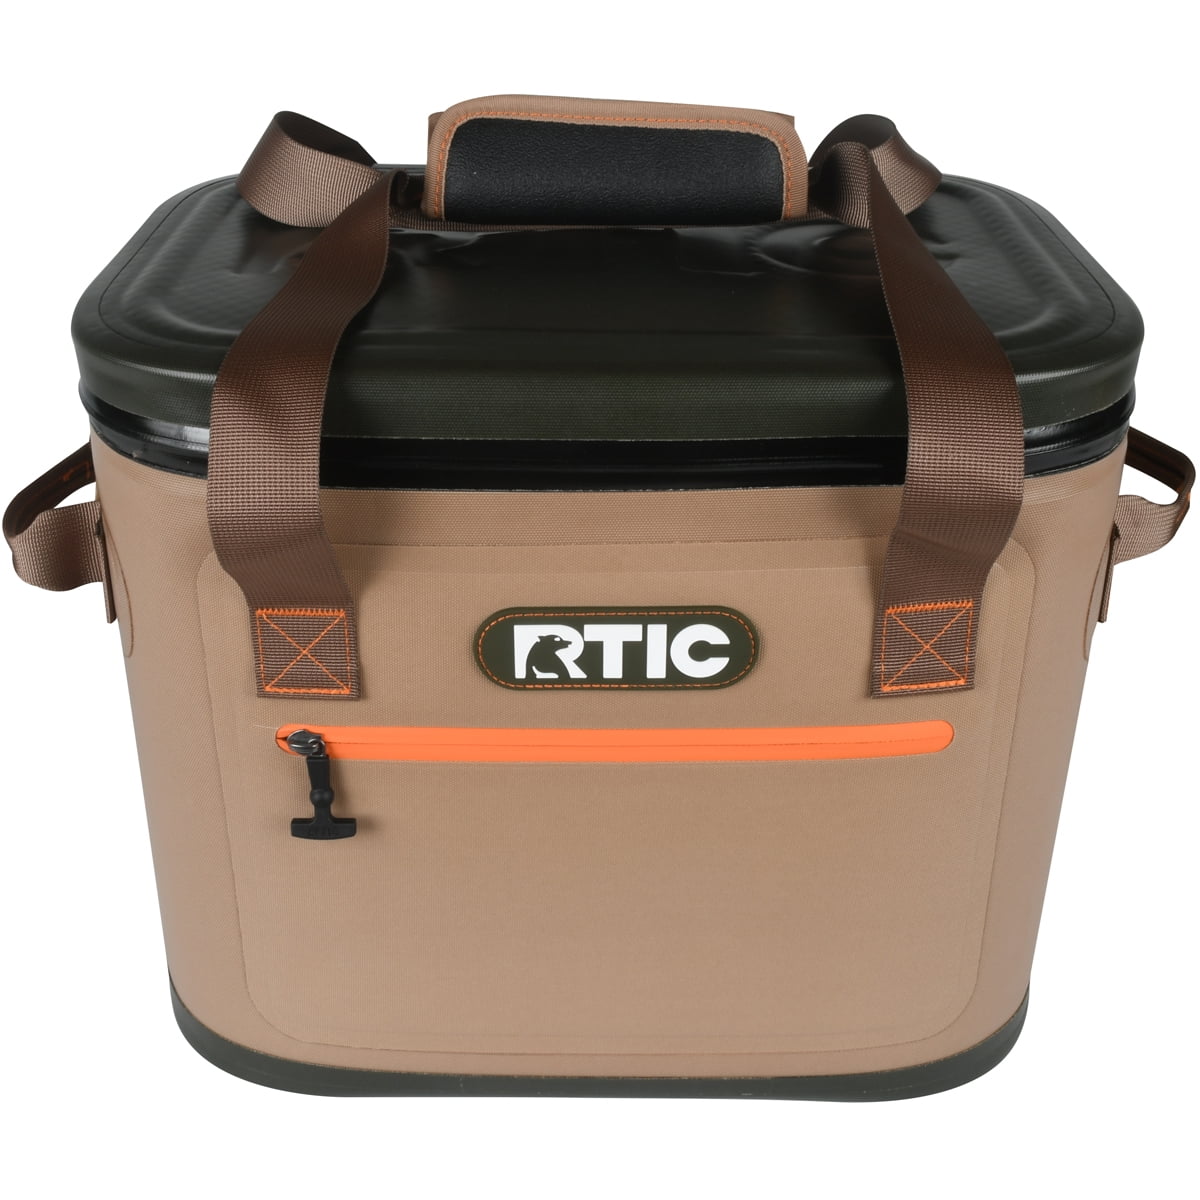 RTIC Soft Pack 30, Tan–